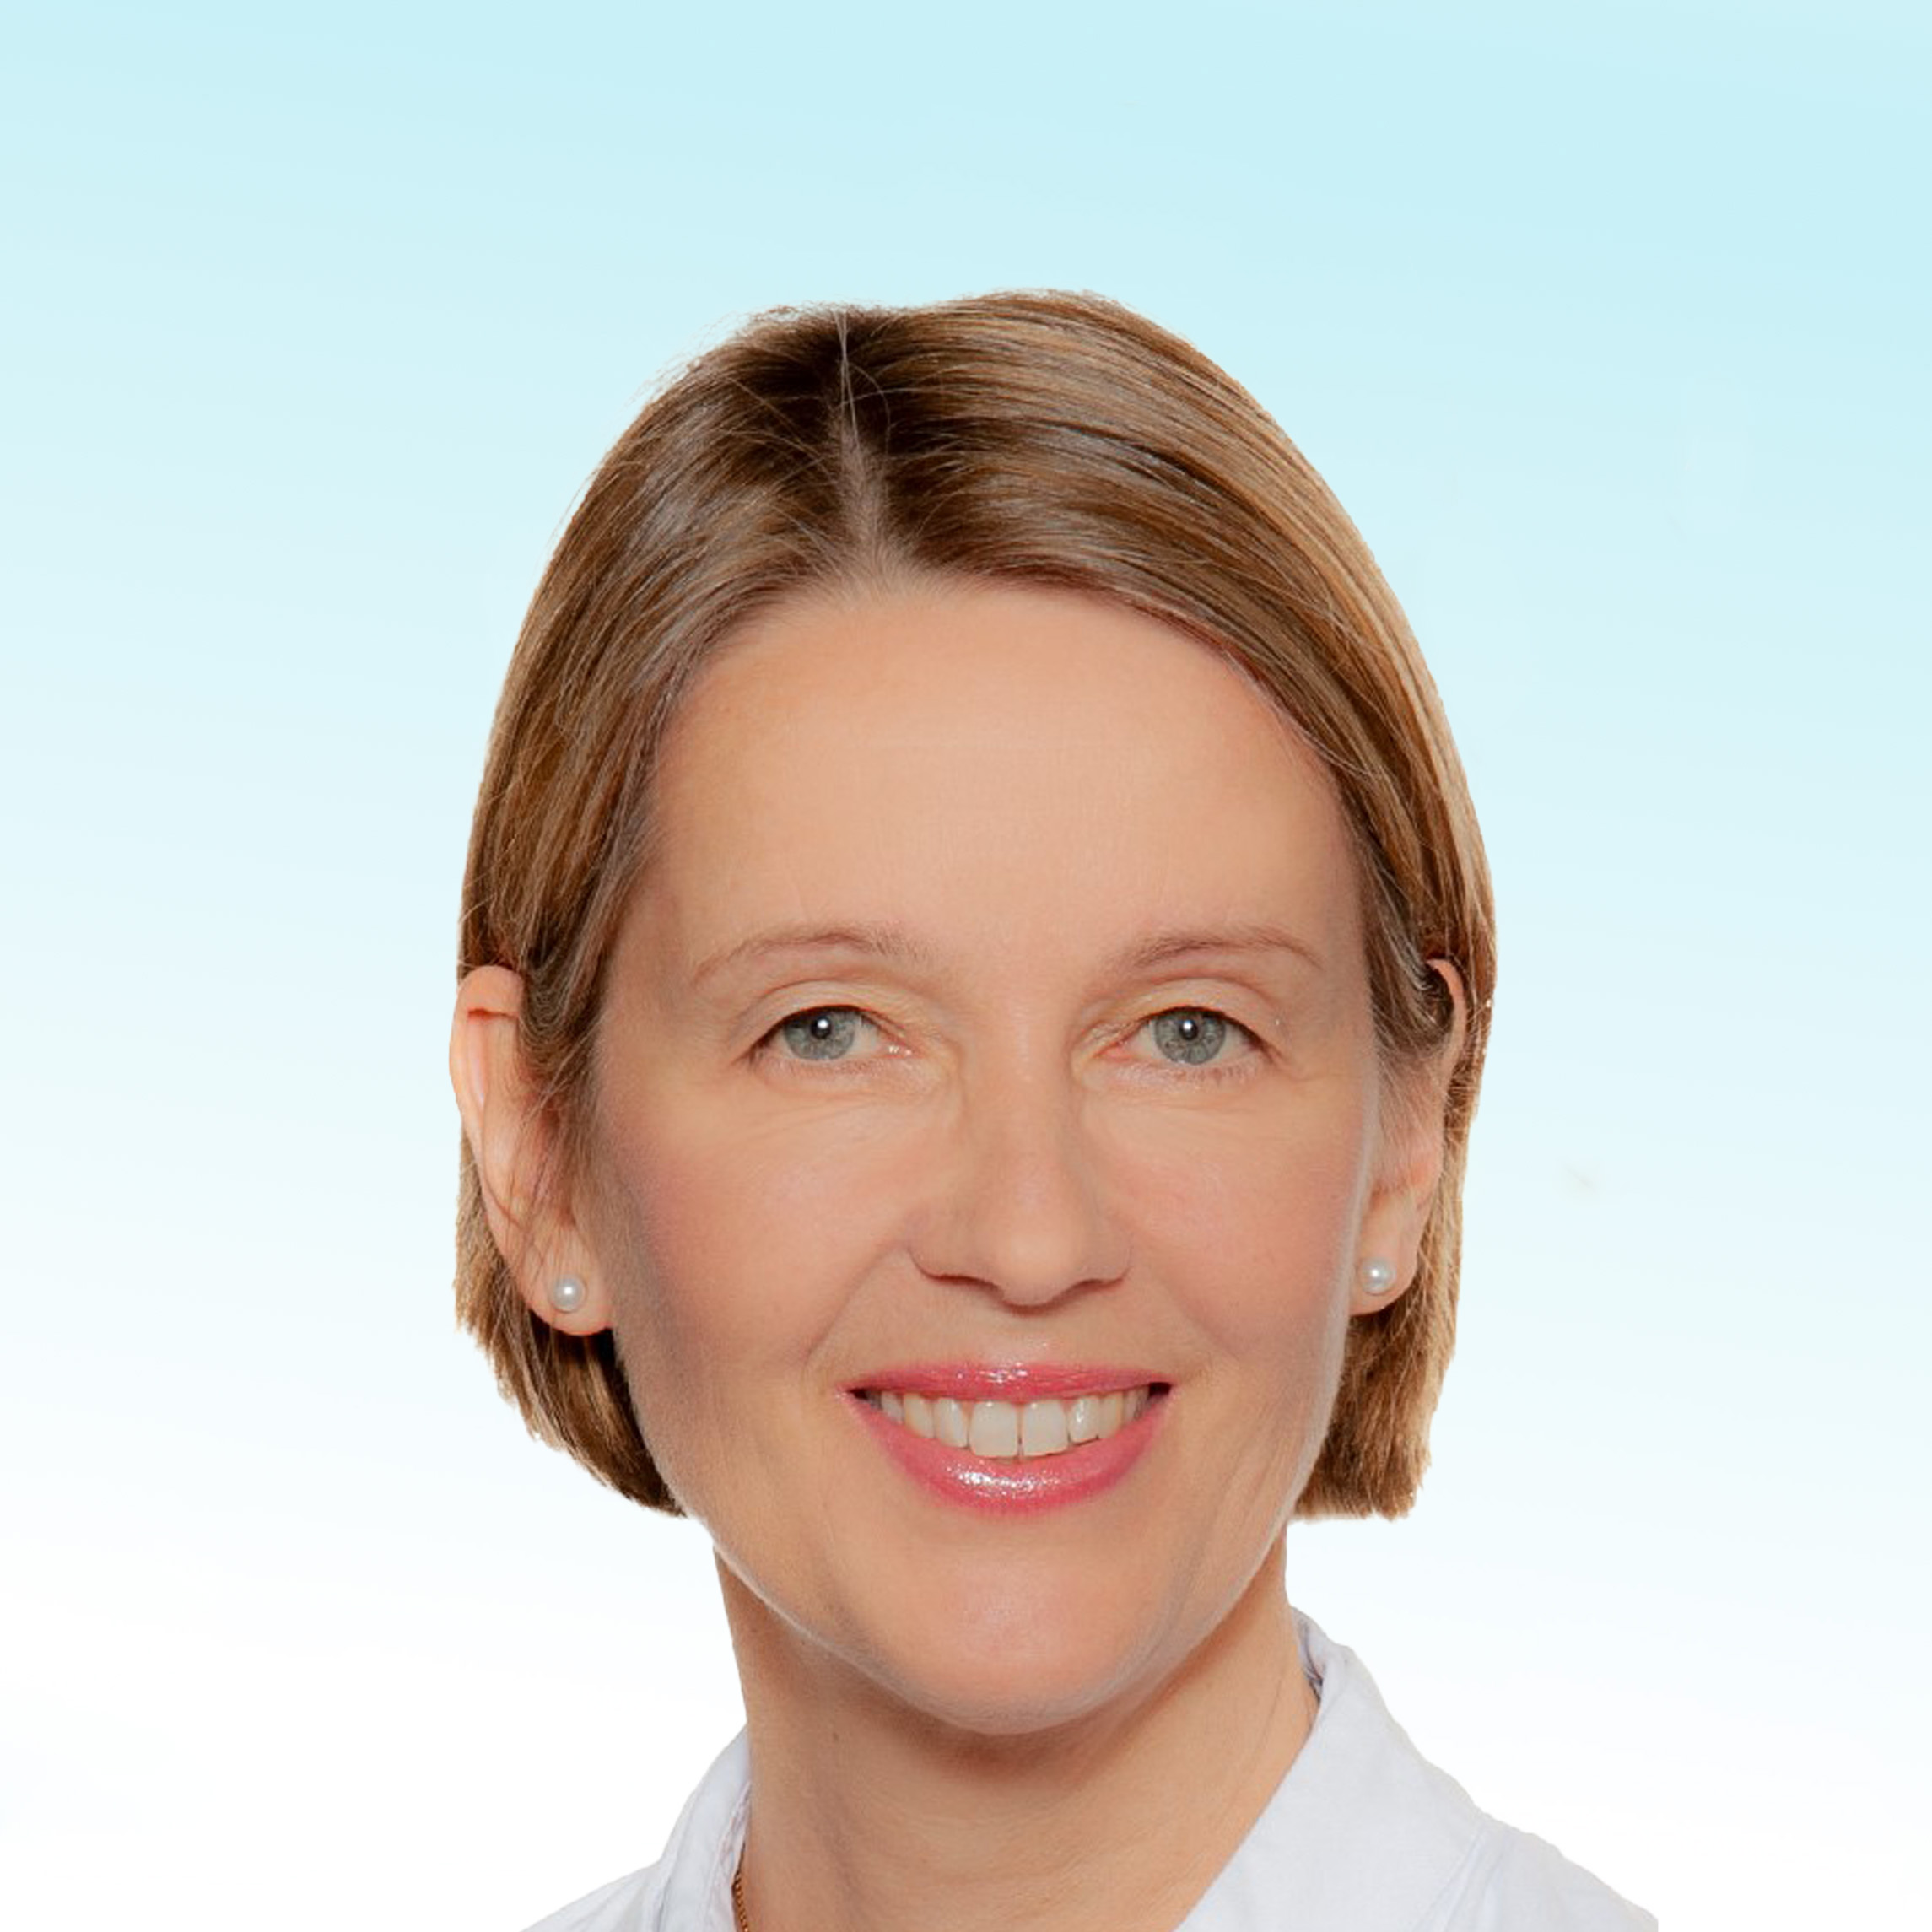 Dermatologist, Prof. Dr. med. Karin Hartmann